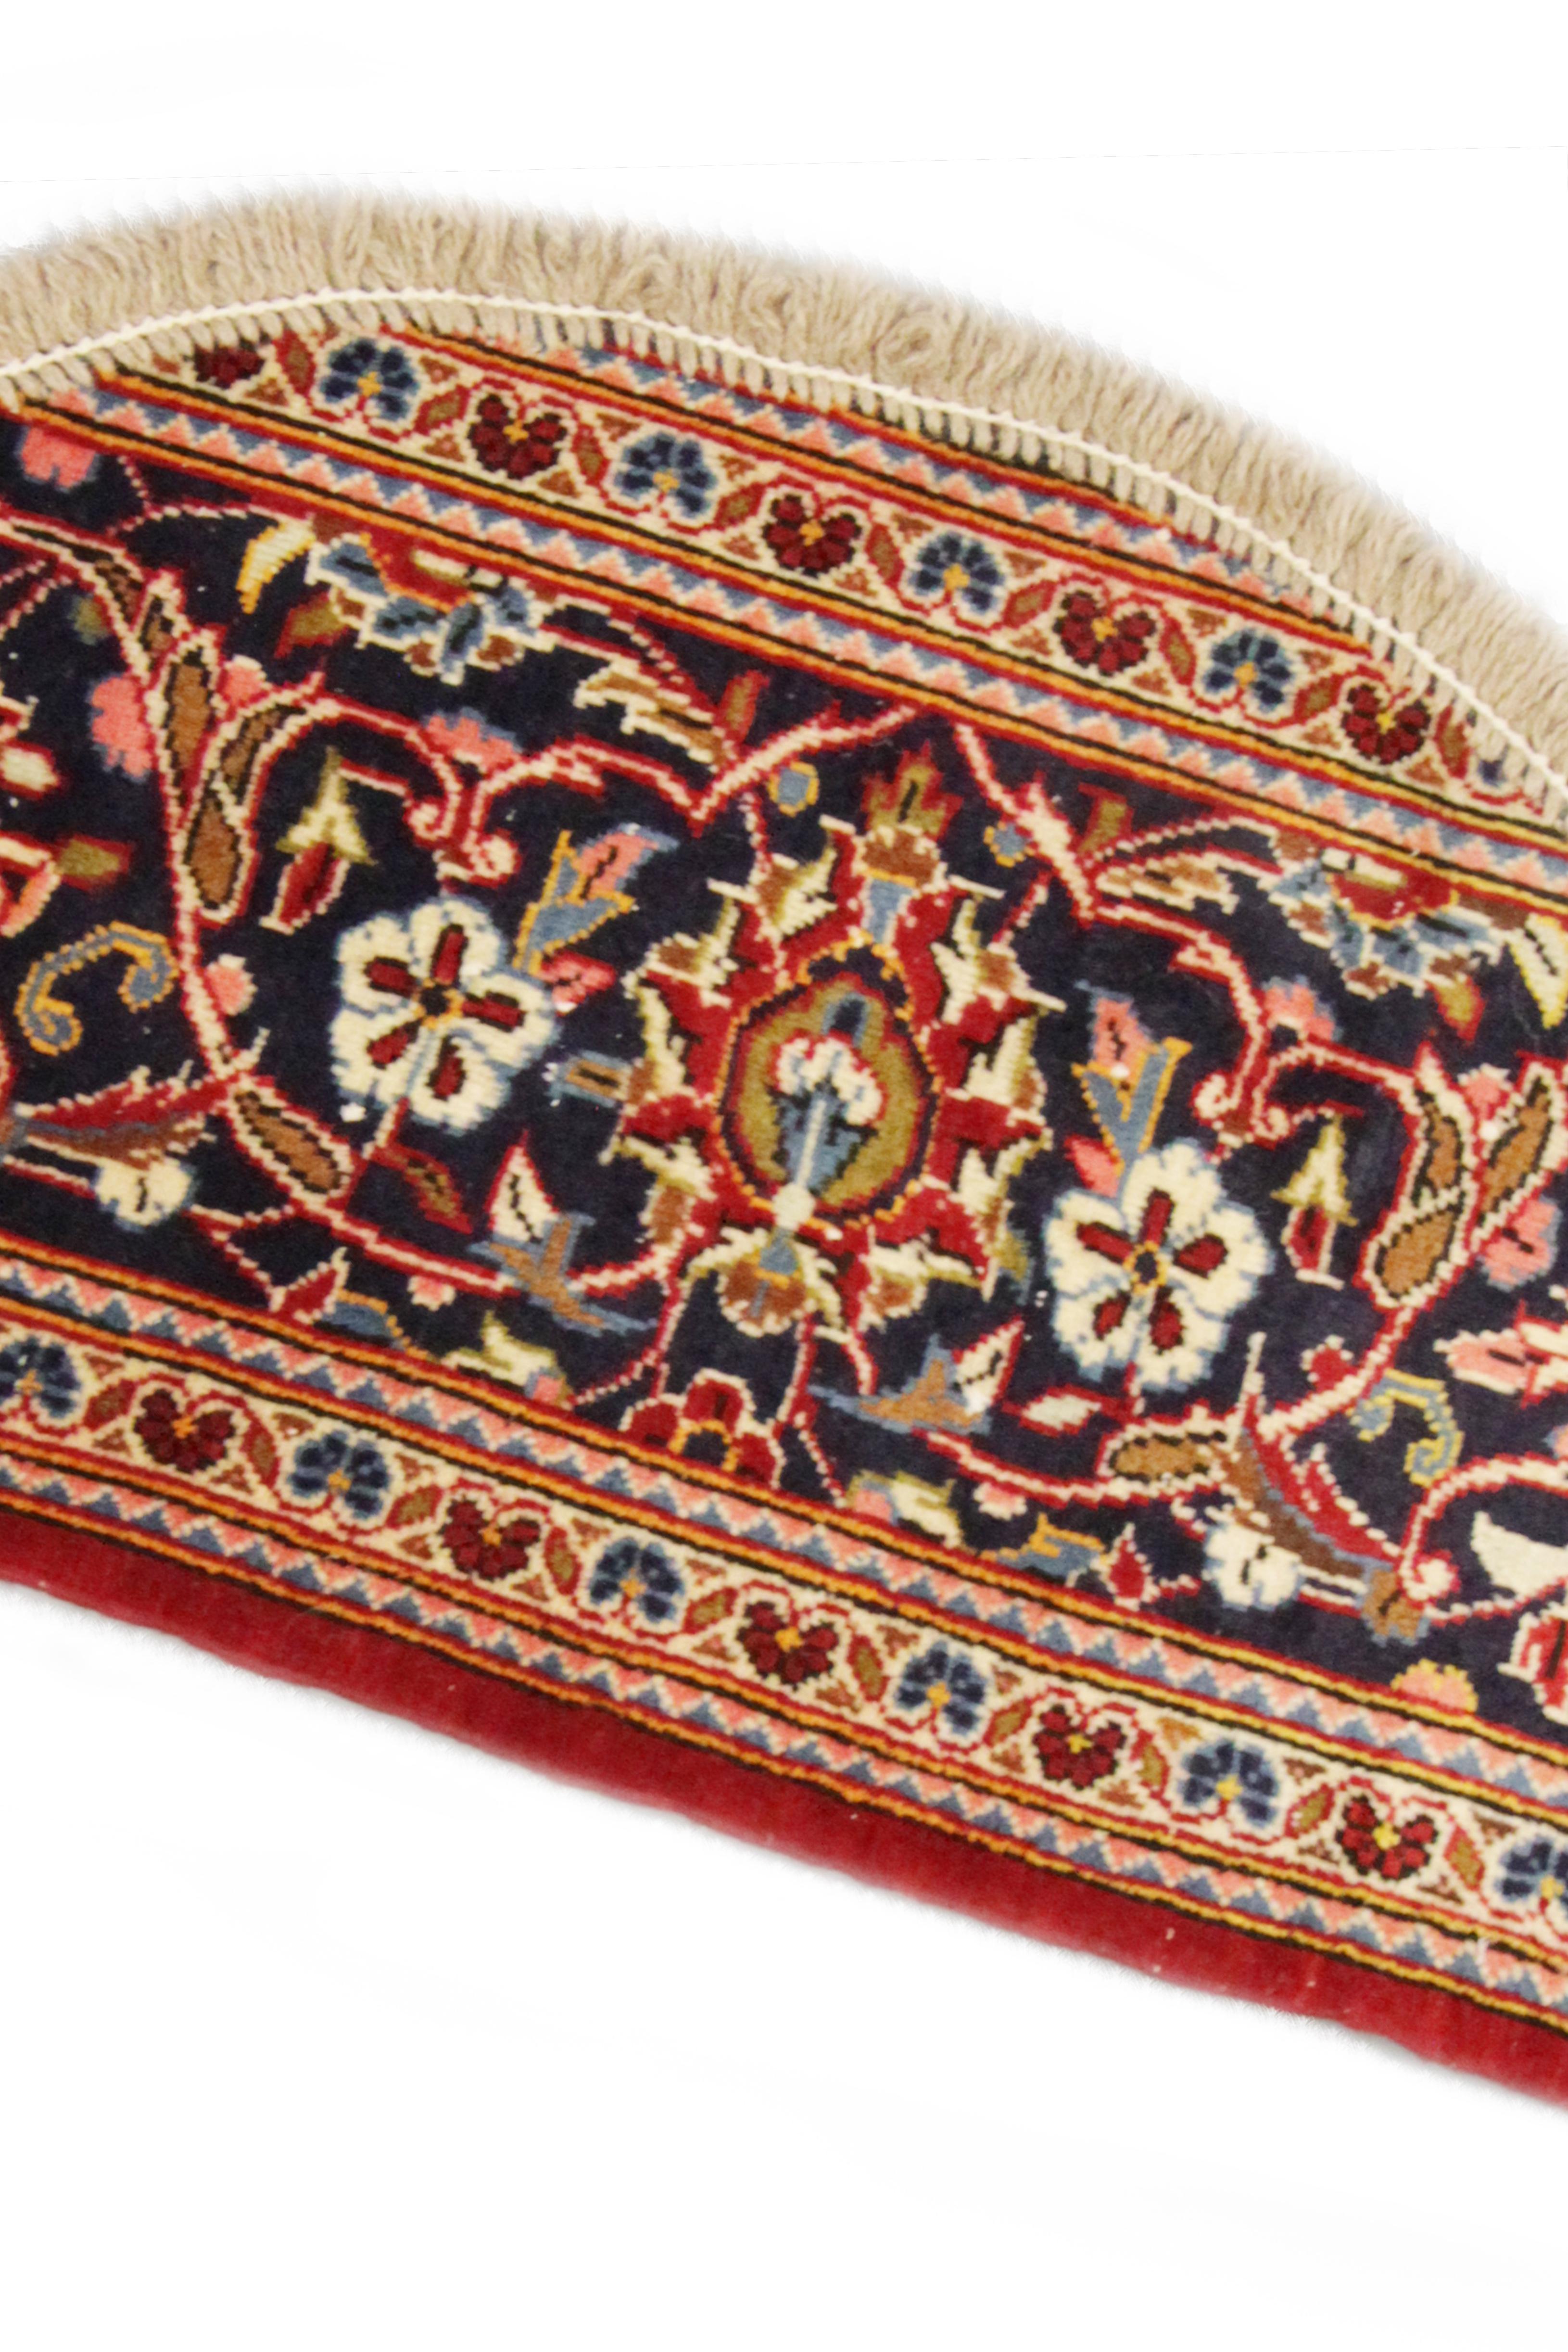 Rustic Handmade Carpet, Semicircle Entrance Way Mat Vintage Oriental Rug Door Mat